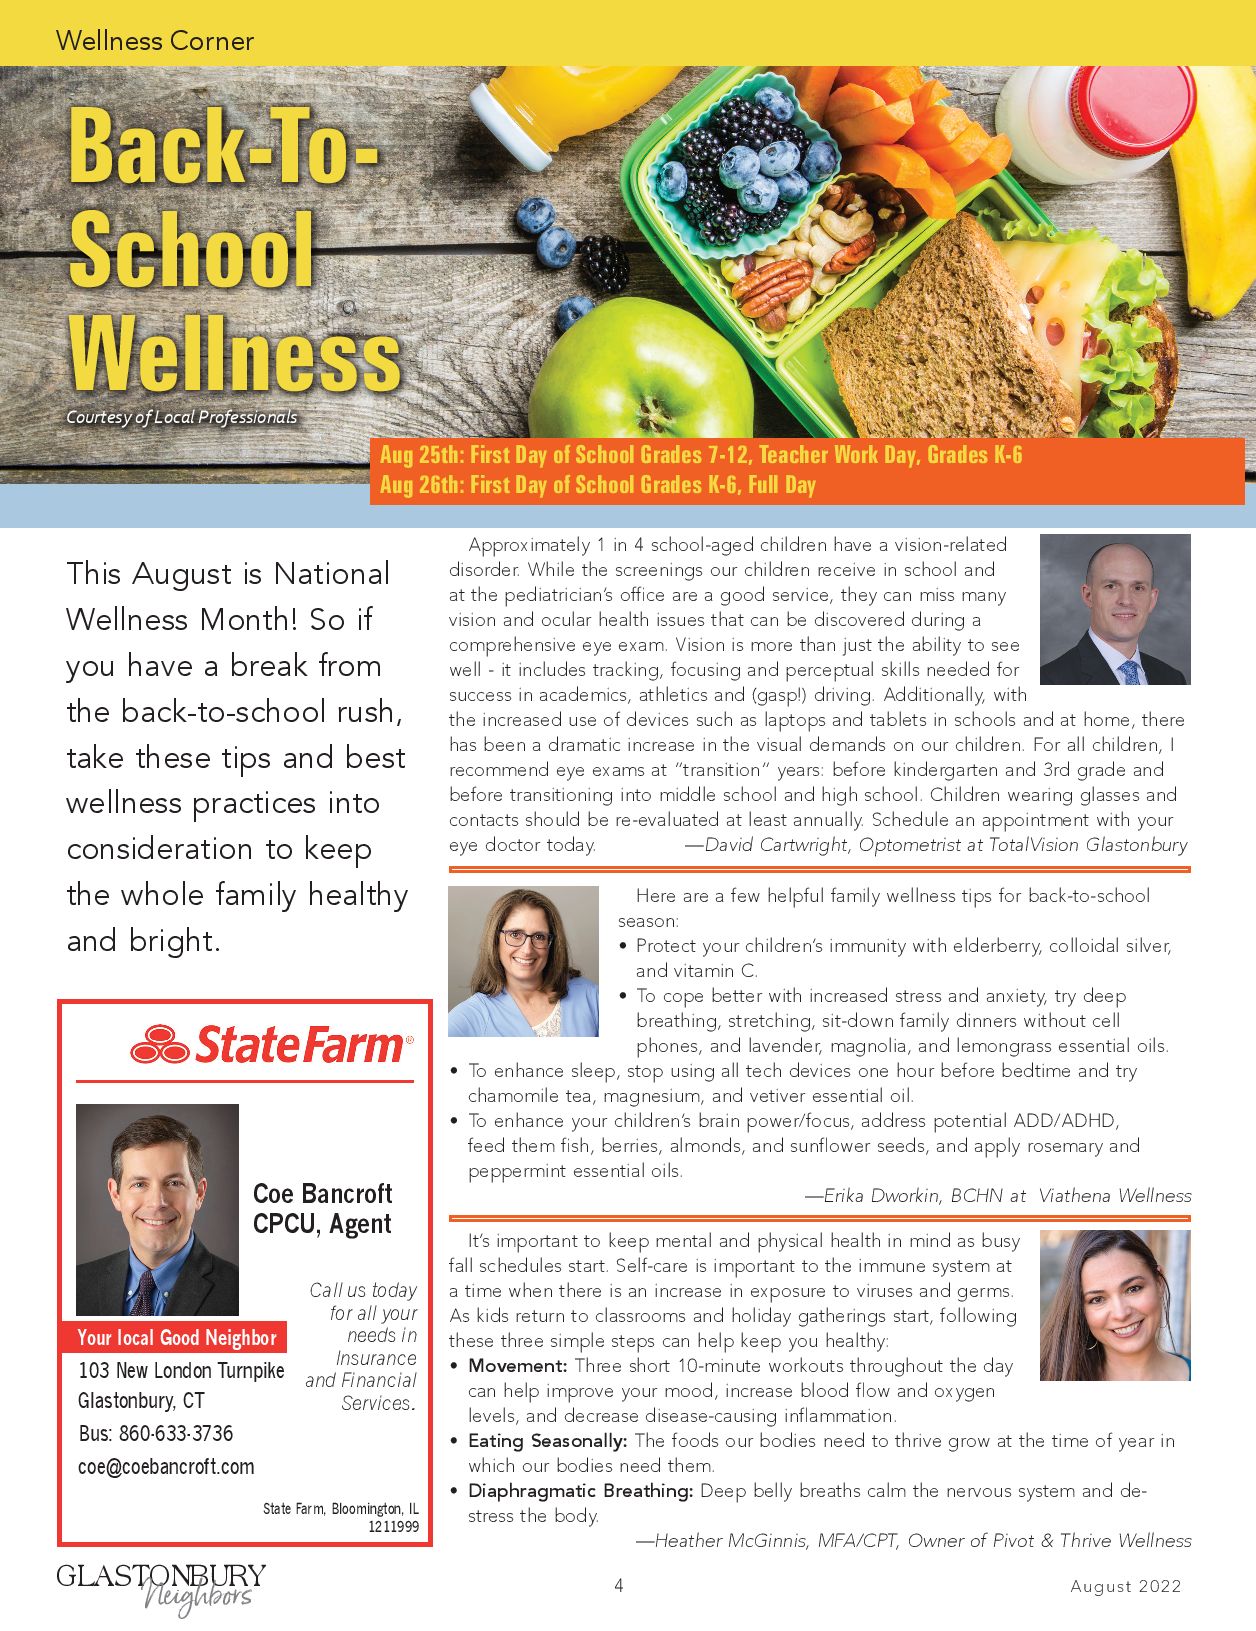 School Wellness Tips—Glastonbury Neighbors (2)